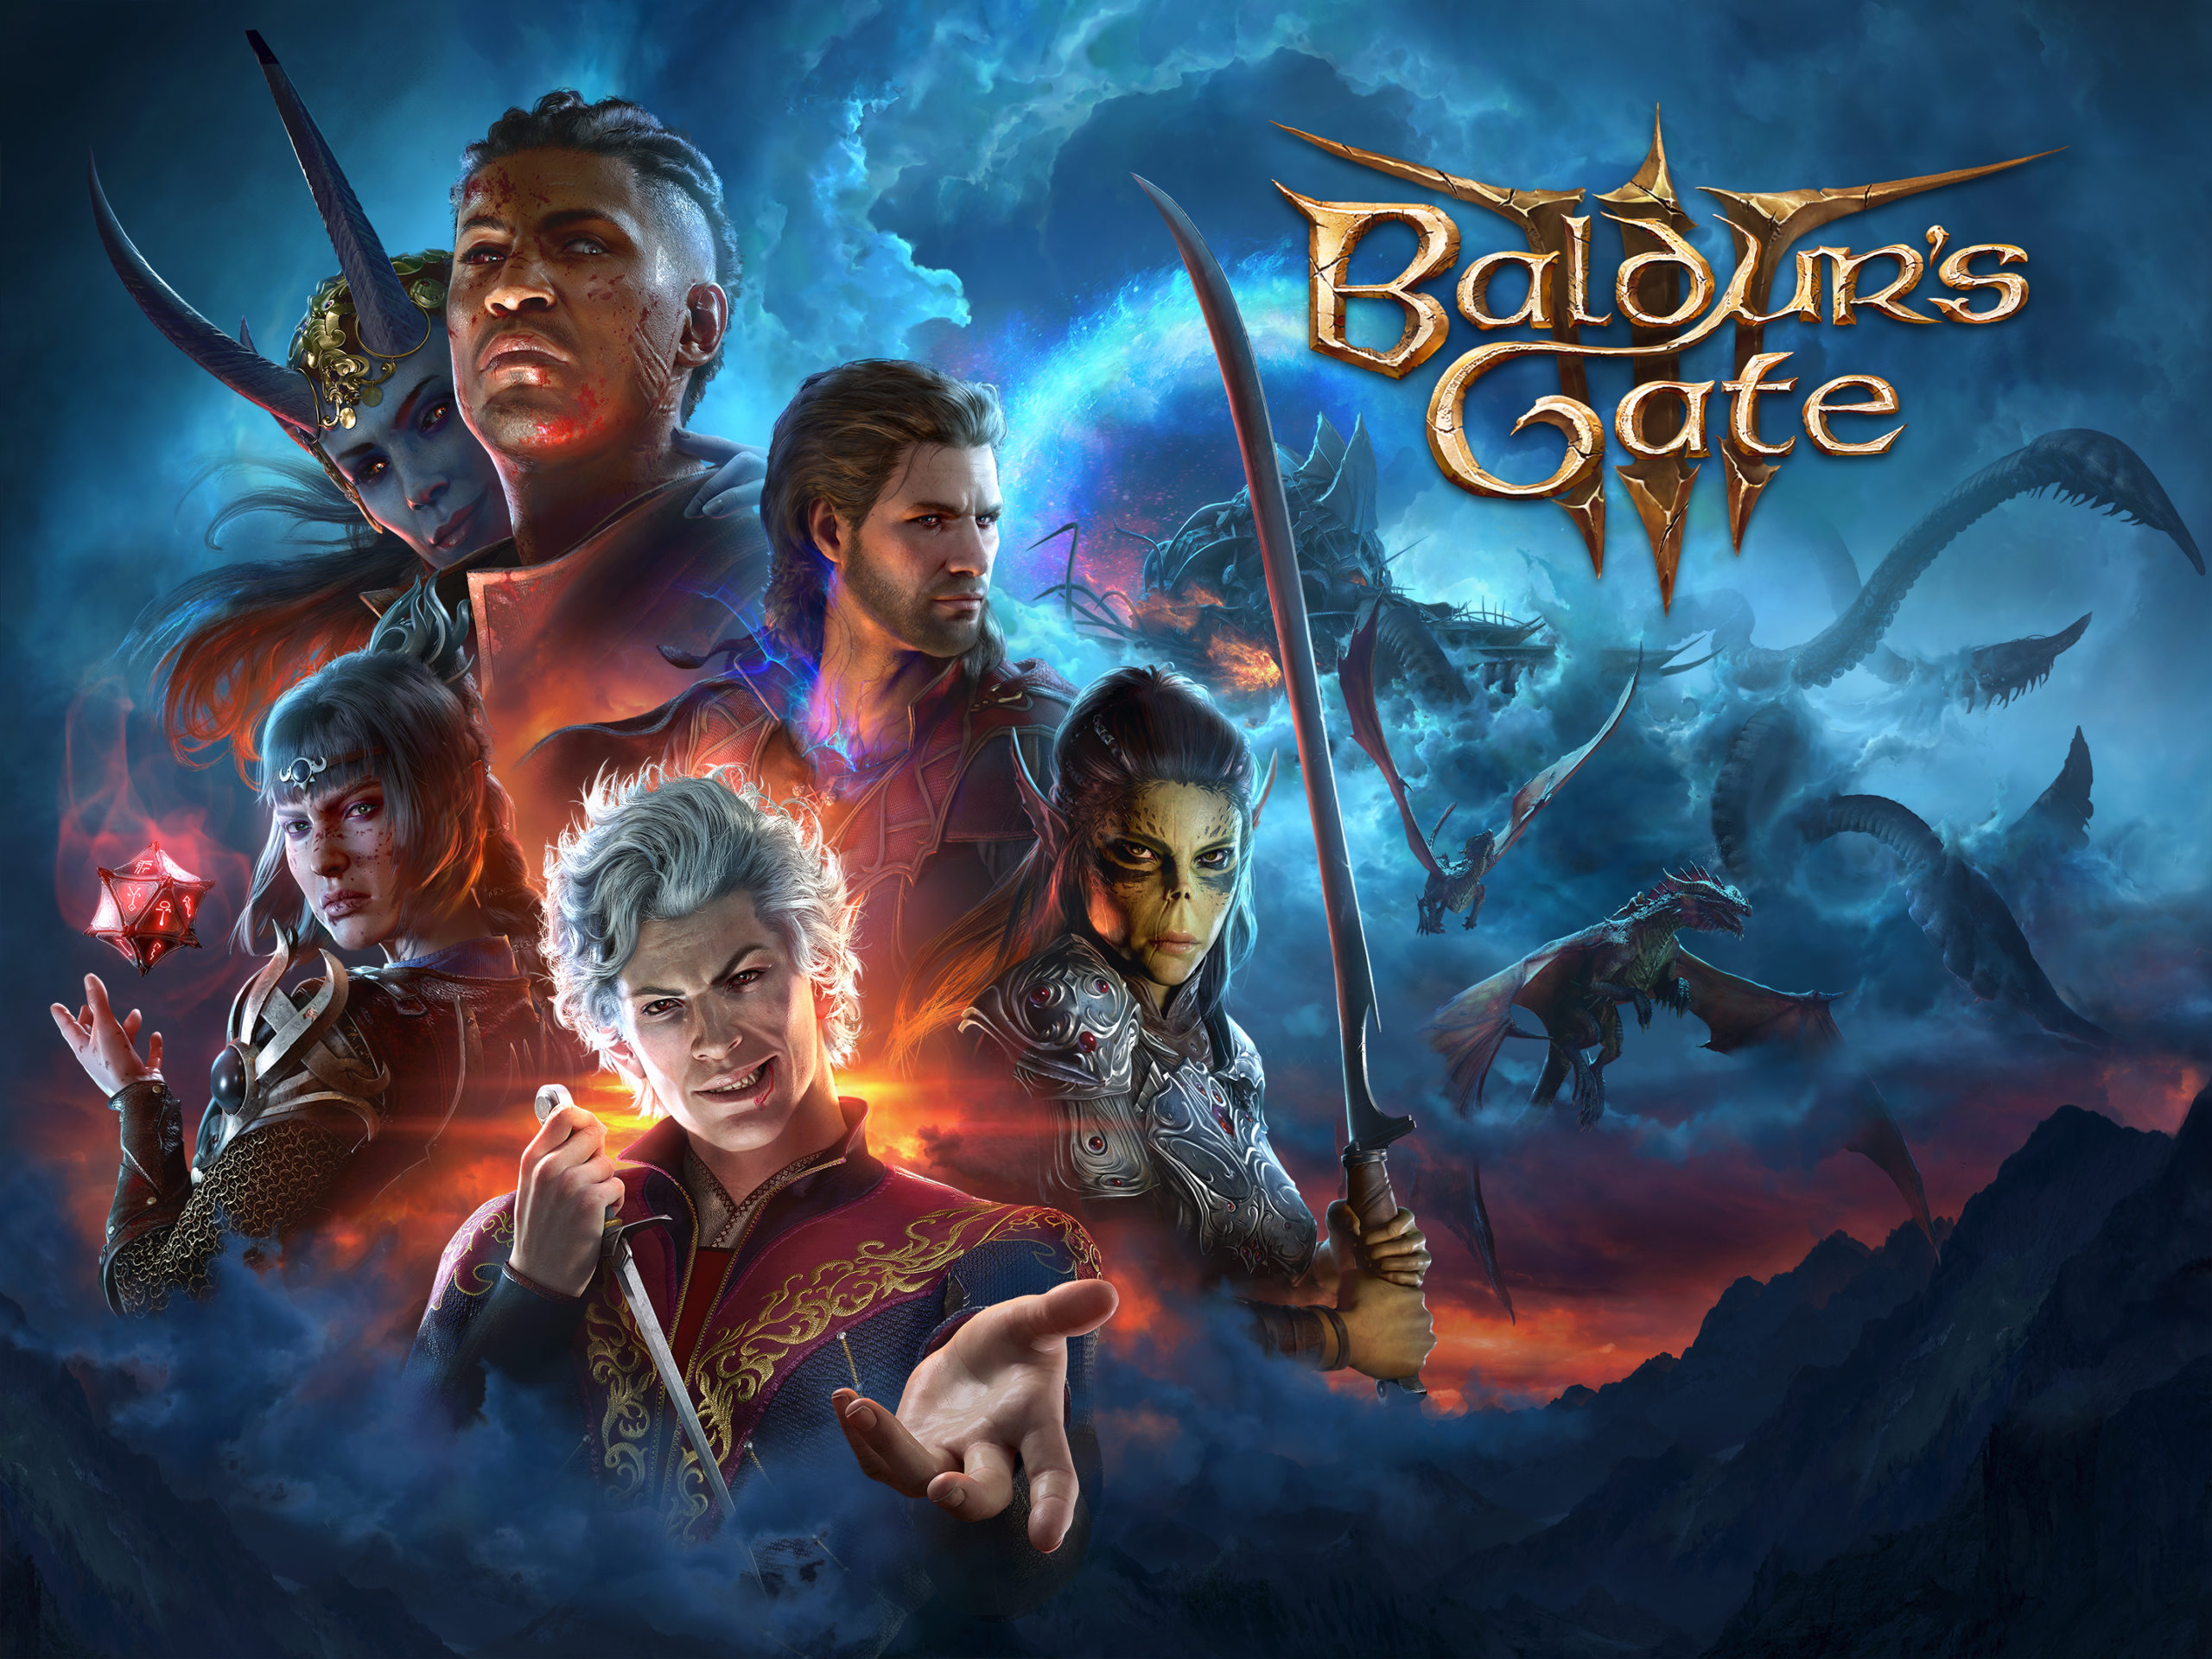 Baldurs Gate 3 - Xbox Series X|S Release